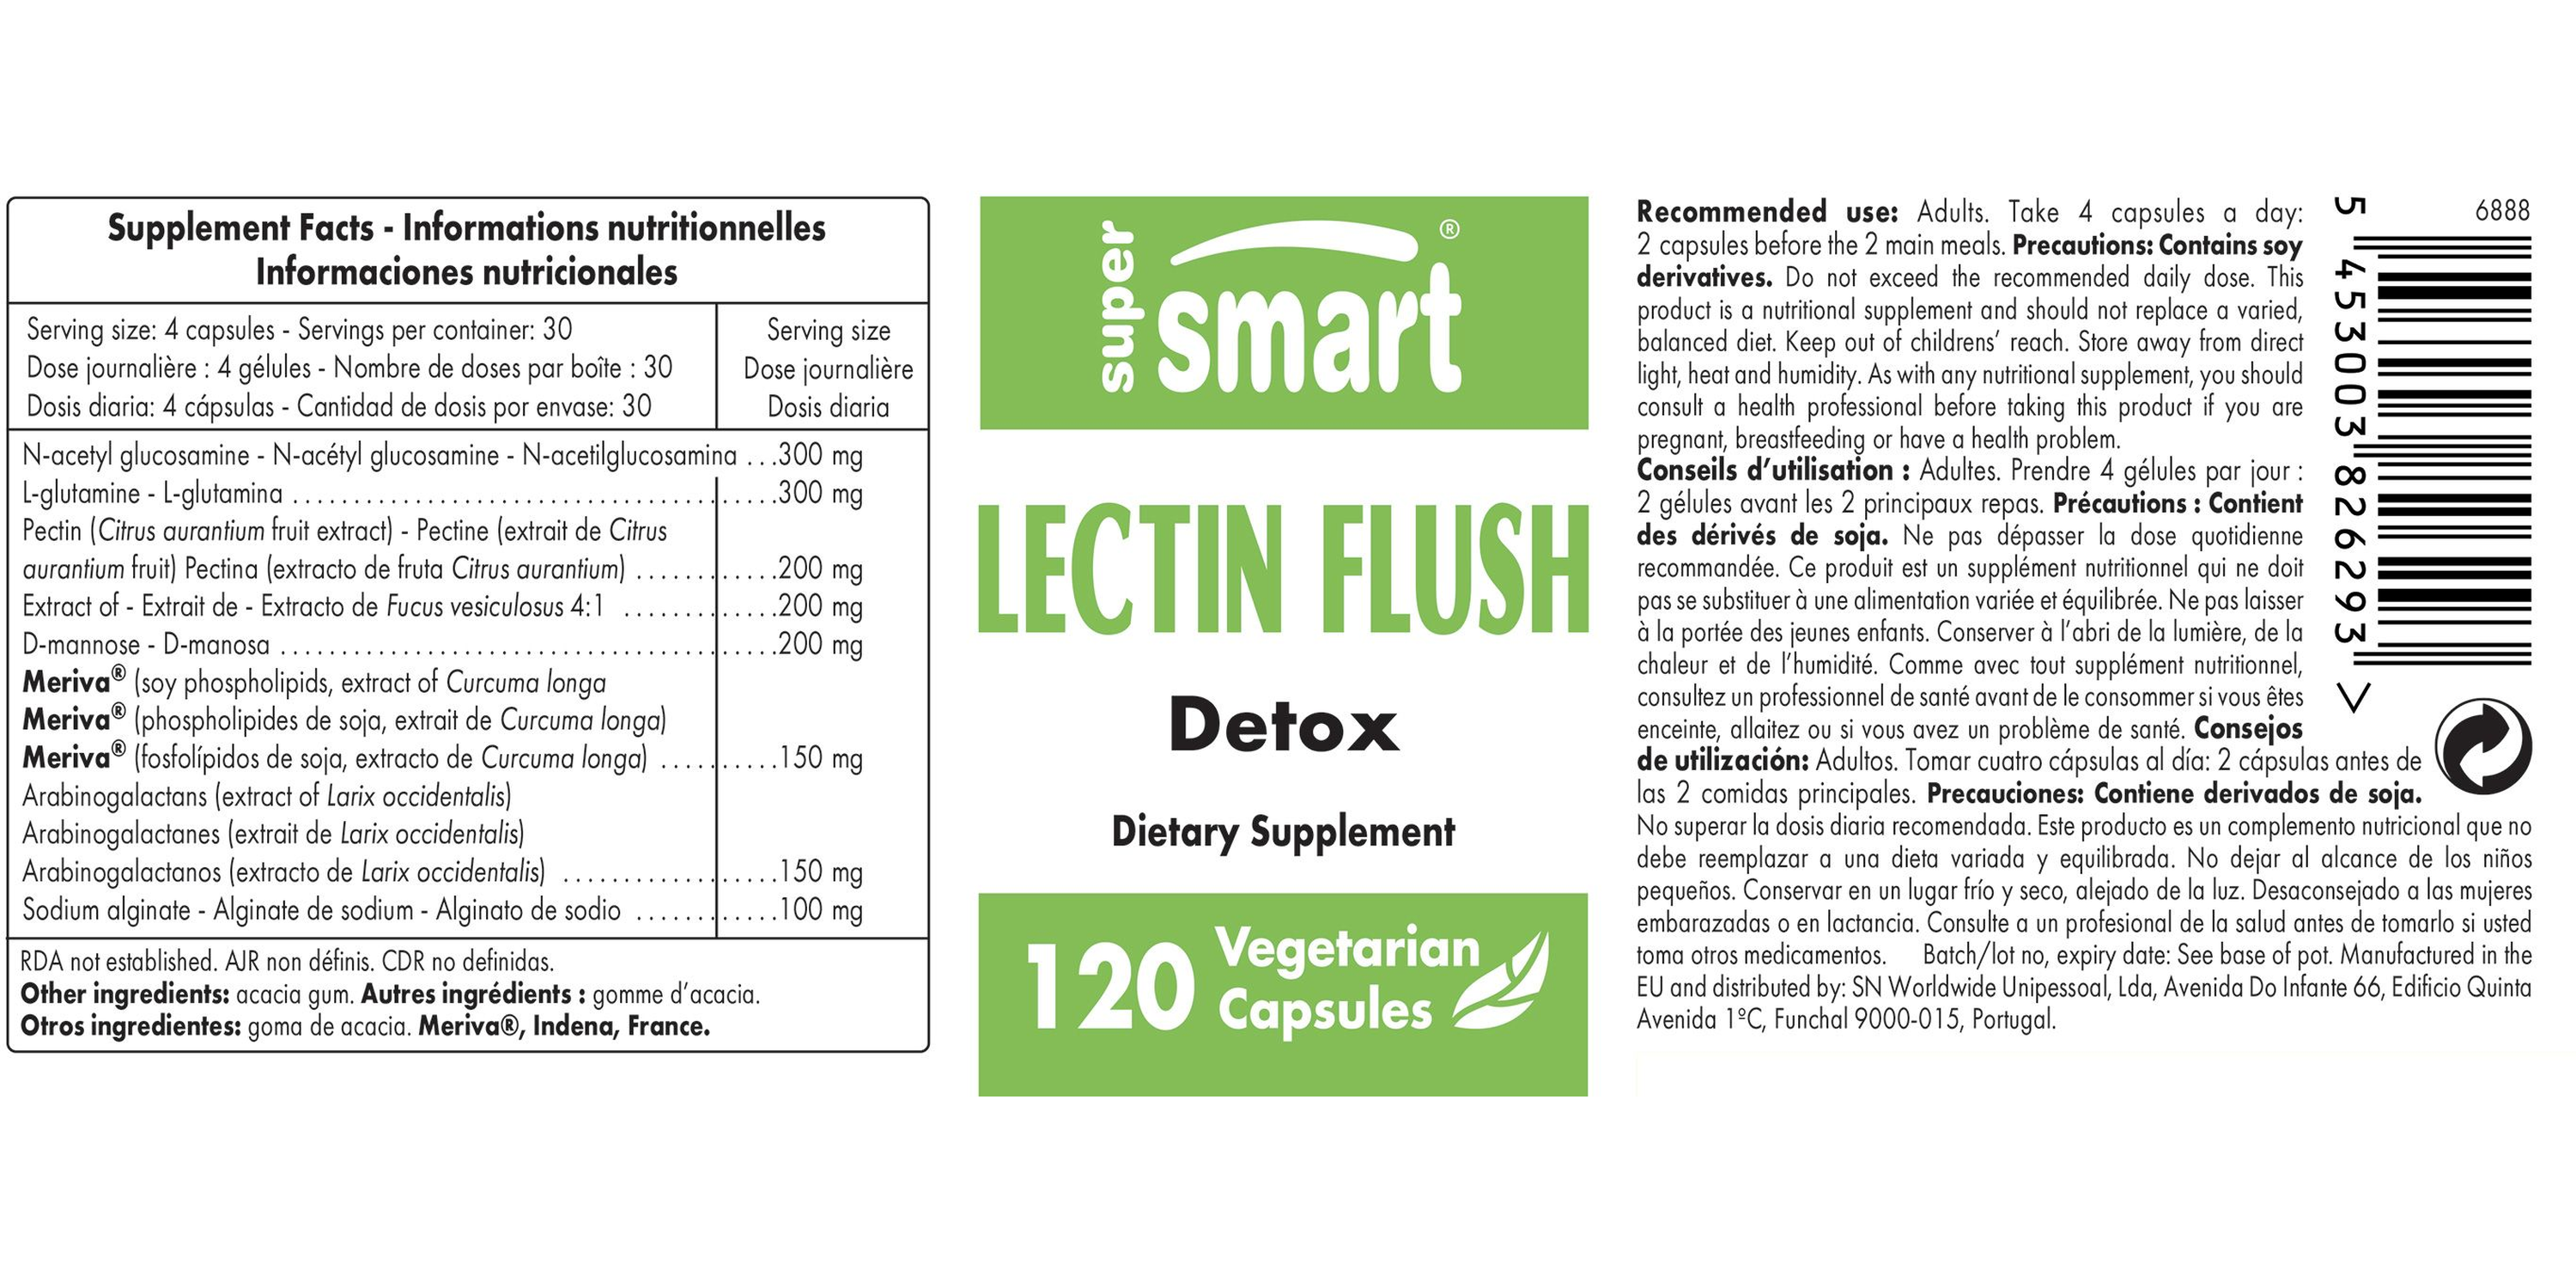 Lectin Flush Supplement